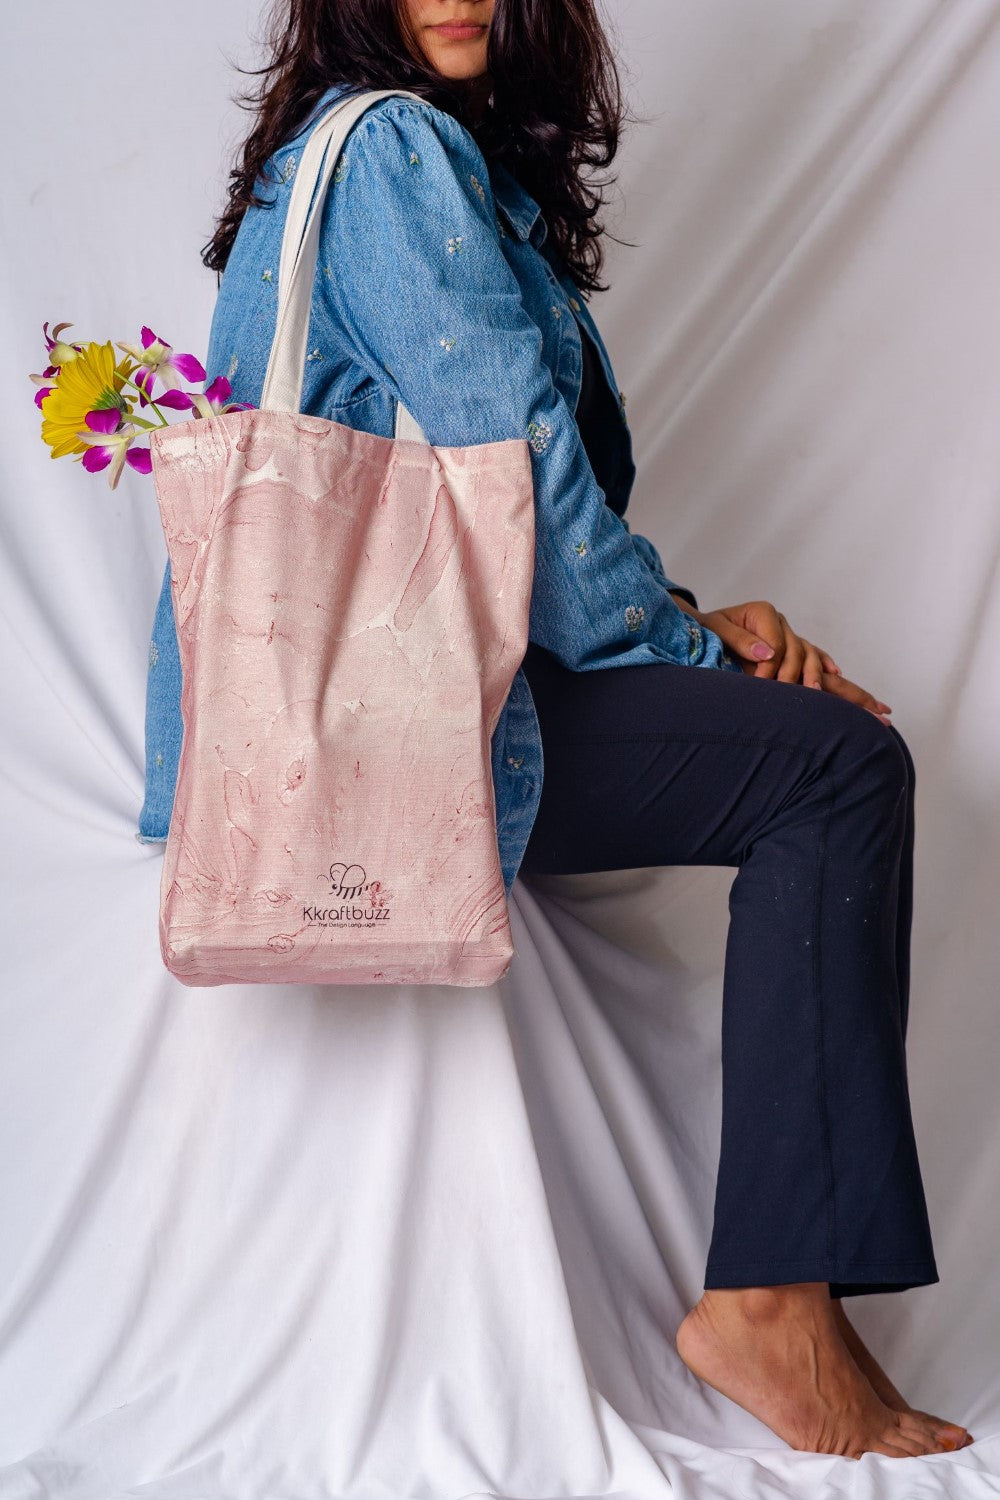 Pink cotton tote bag